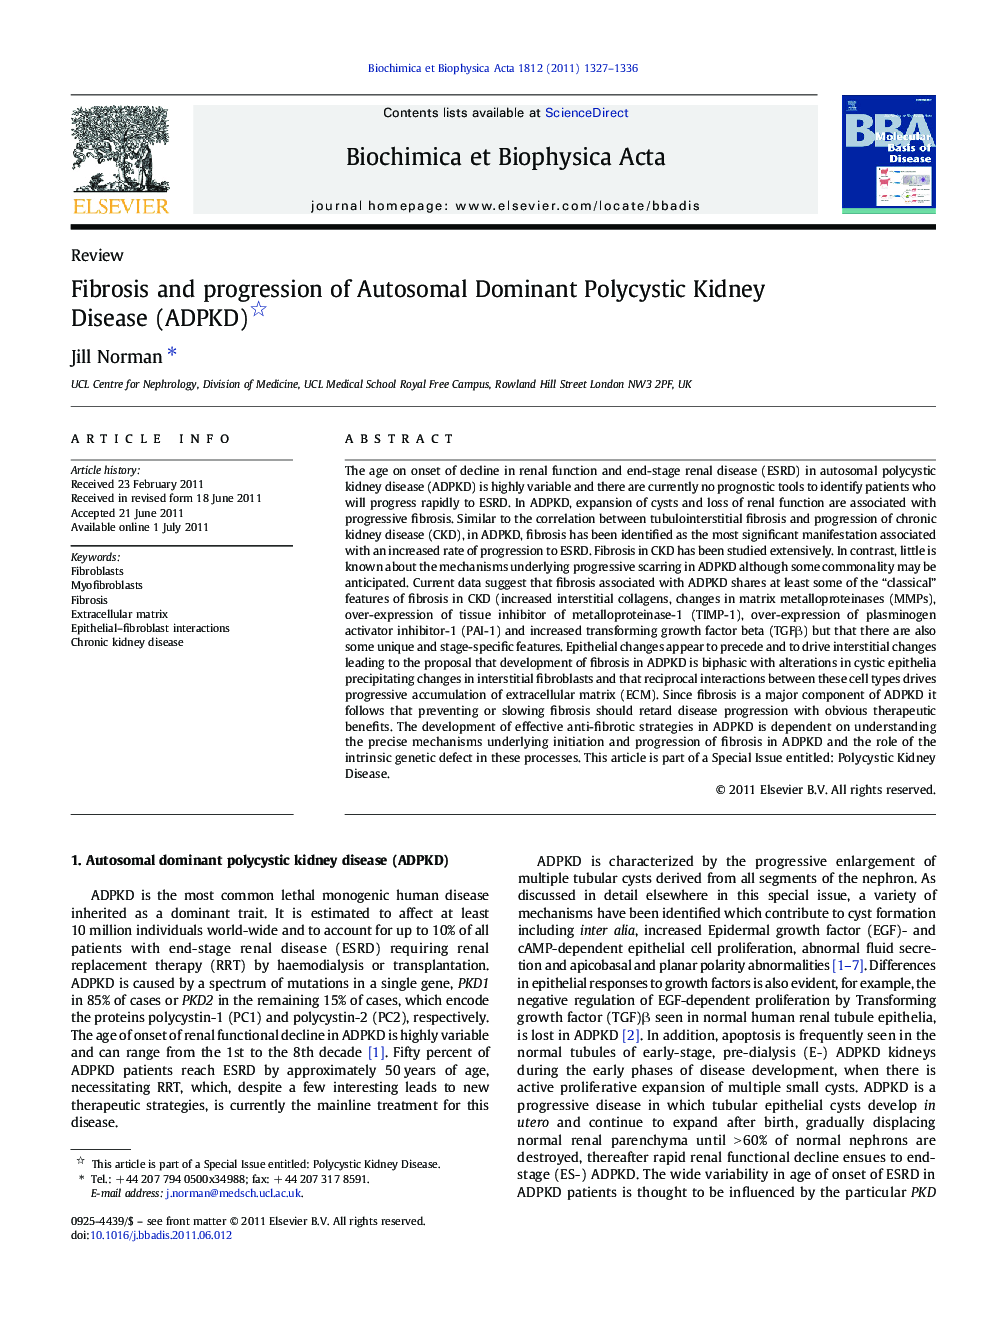 Fibrosis and progression of Autosomal Dominant Polycystic Kidney Disease (ADPKD) 